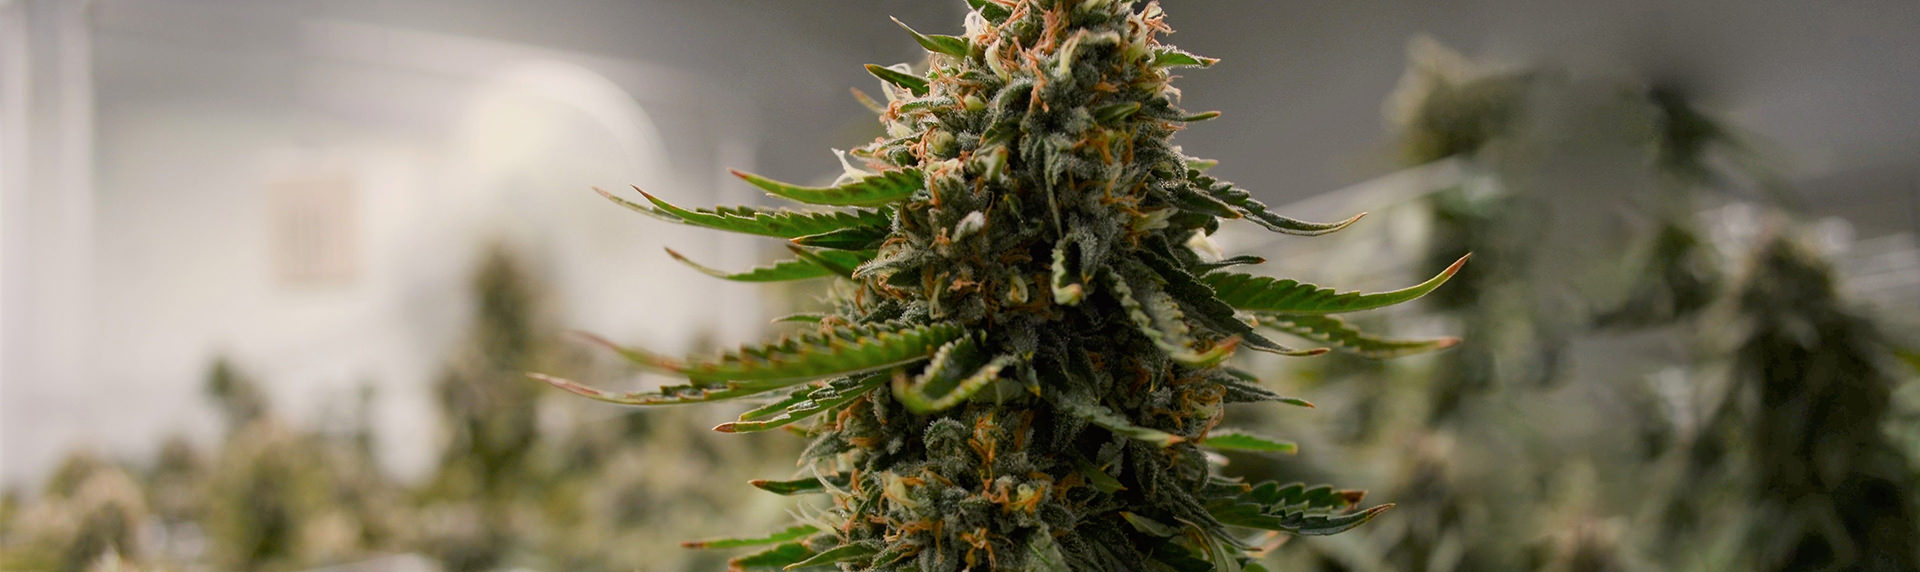 cannabis, using full spectrum flowering distribution